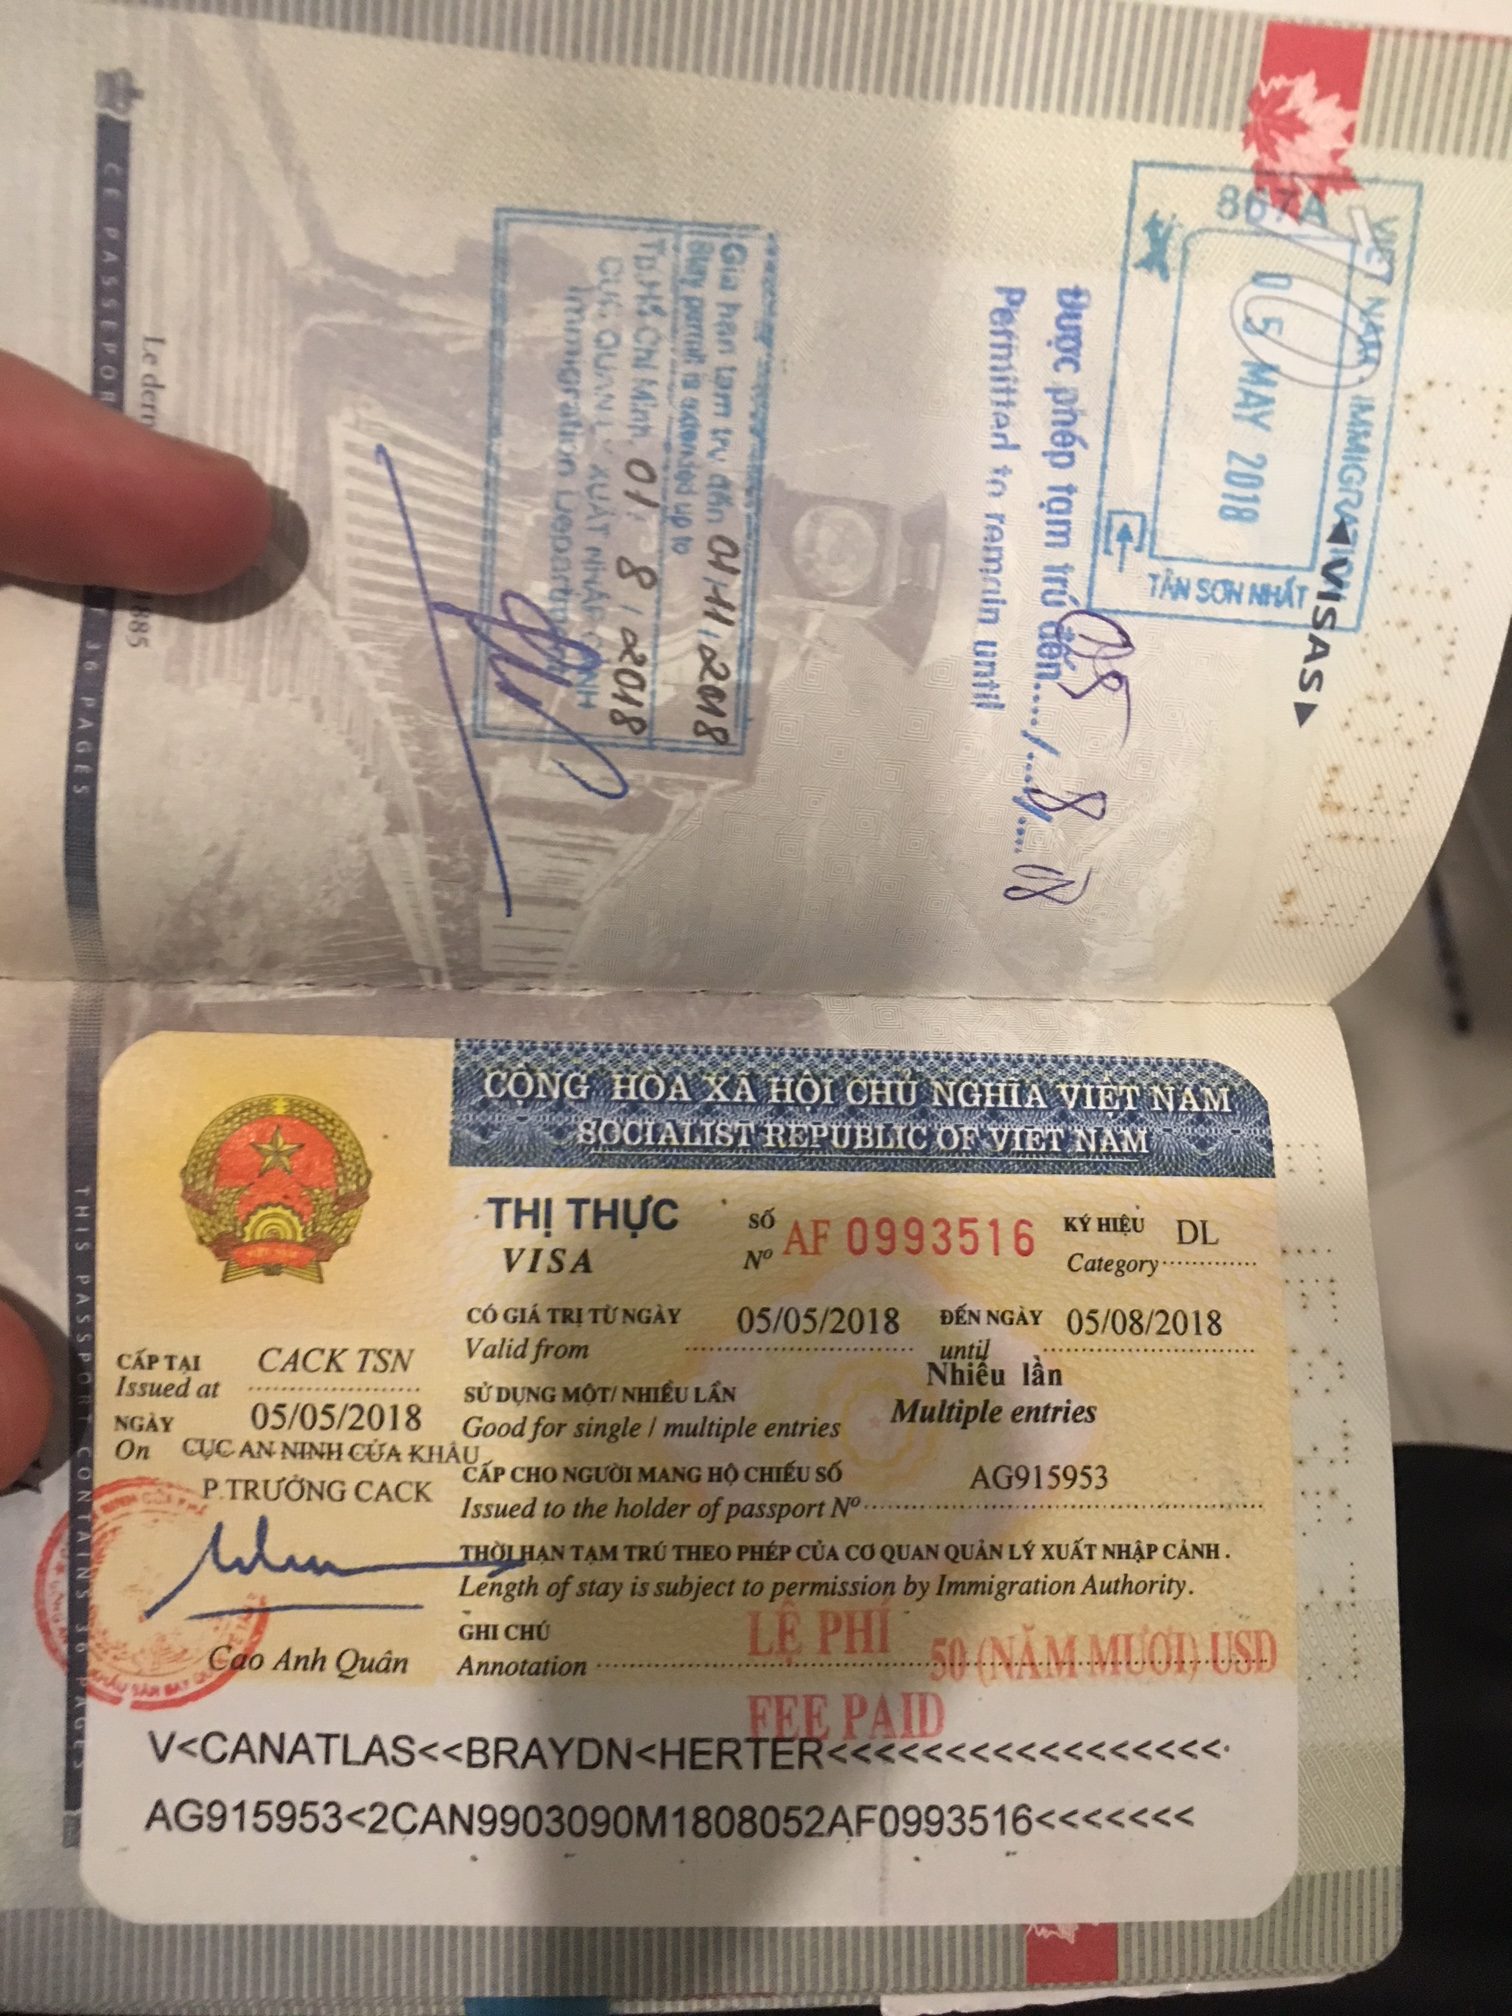 Vietnam Visa: Requirements and Process